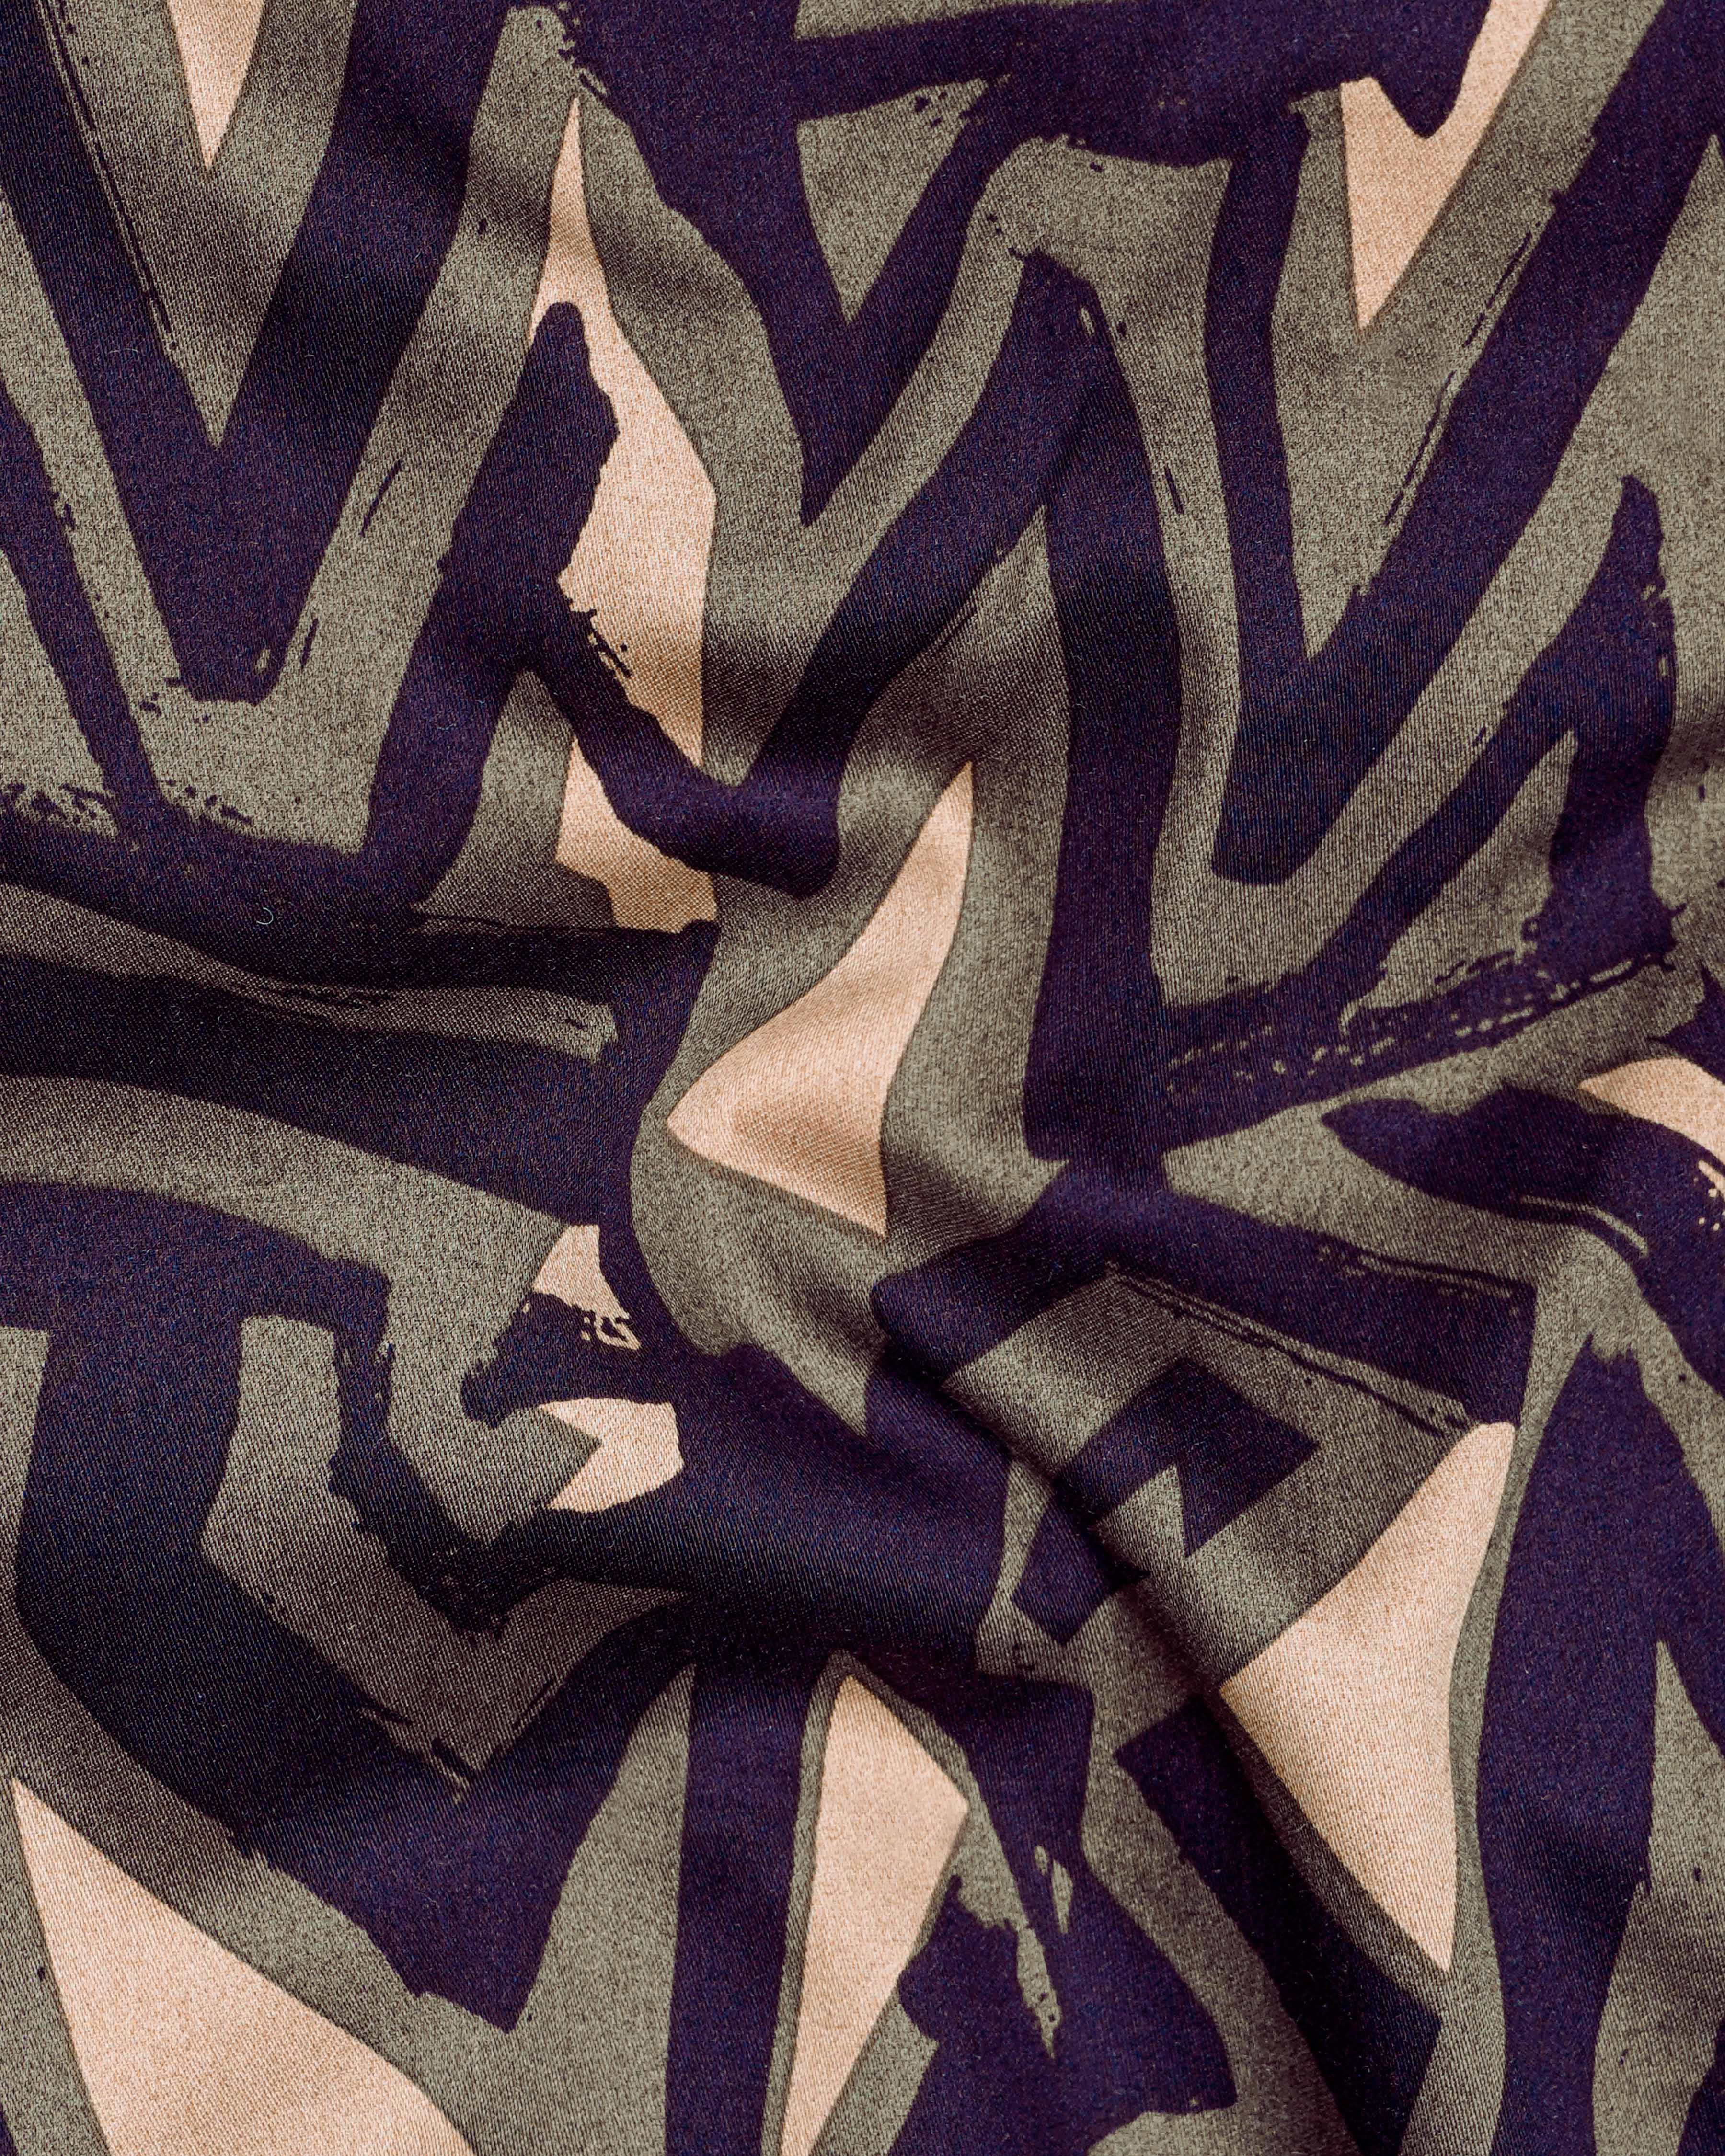 Haiti Purple with Makara Brown Printed Super Soft Premium Cotton Half Sleeved Shirt 9871-CC-BLK-SS-38, 9871-CC-BLK-SS-39, 9871-CC-BLK-SS-40, 9871-CC-BLK-SS-42, 9871-CC-BLK-SS-44, 9871-CC-BLK-SS-46, 9871-CC-BLK-SS-48, 9871-CC-BLK-SS-50, 9871-CC-BLK-SS-52